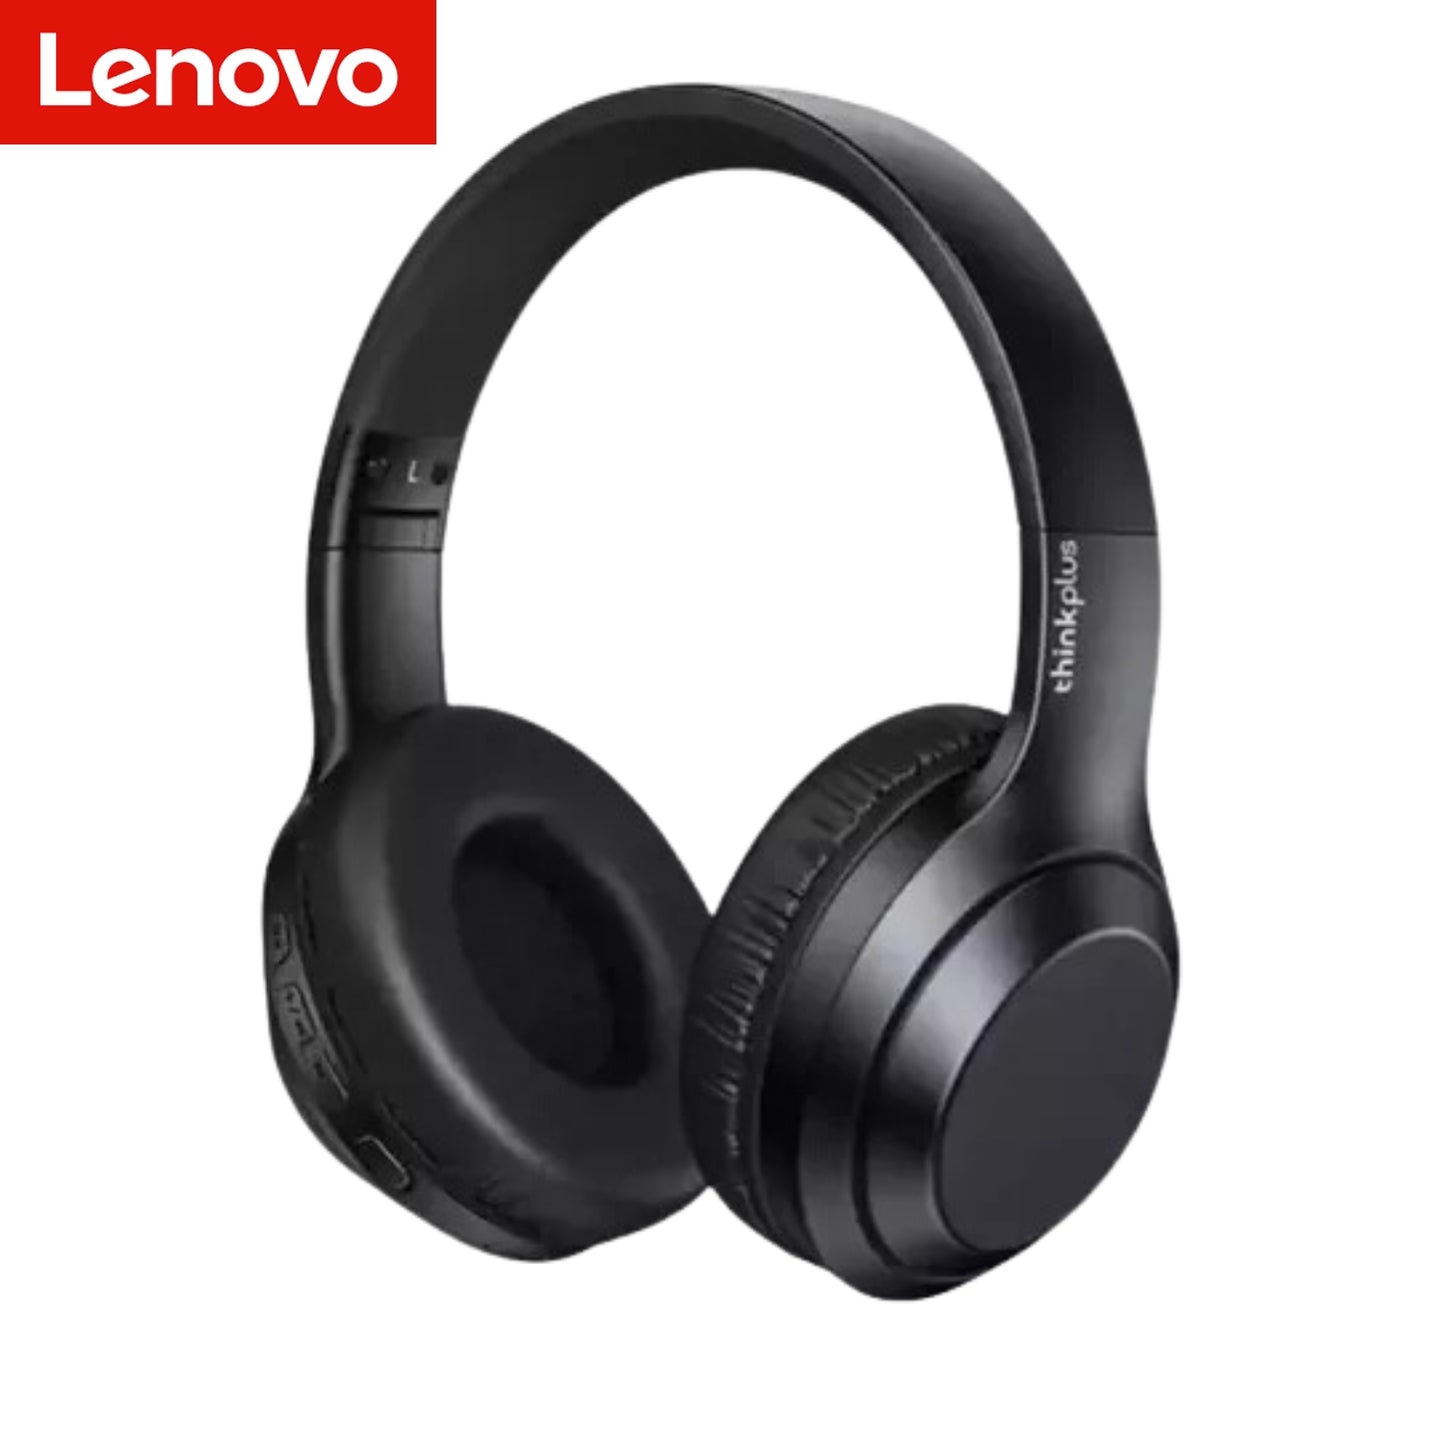 Audifonos Lenovo Bluetooth TH30  Over Ear